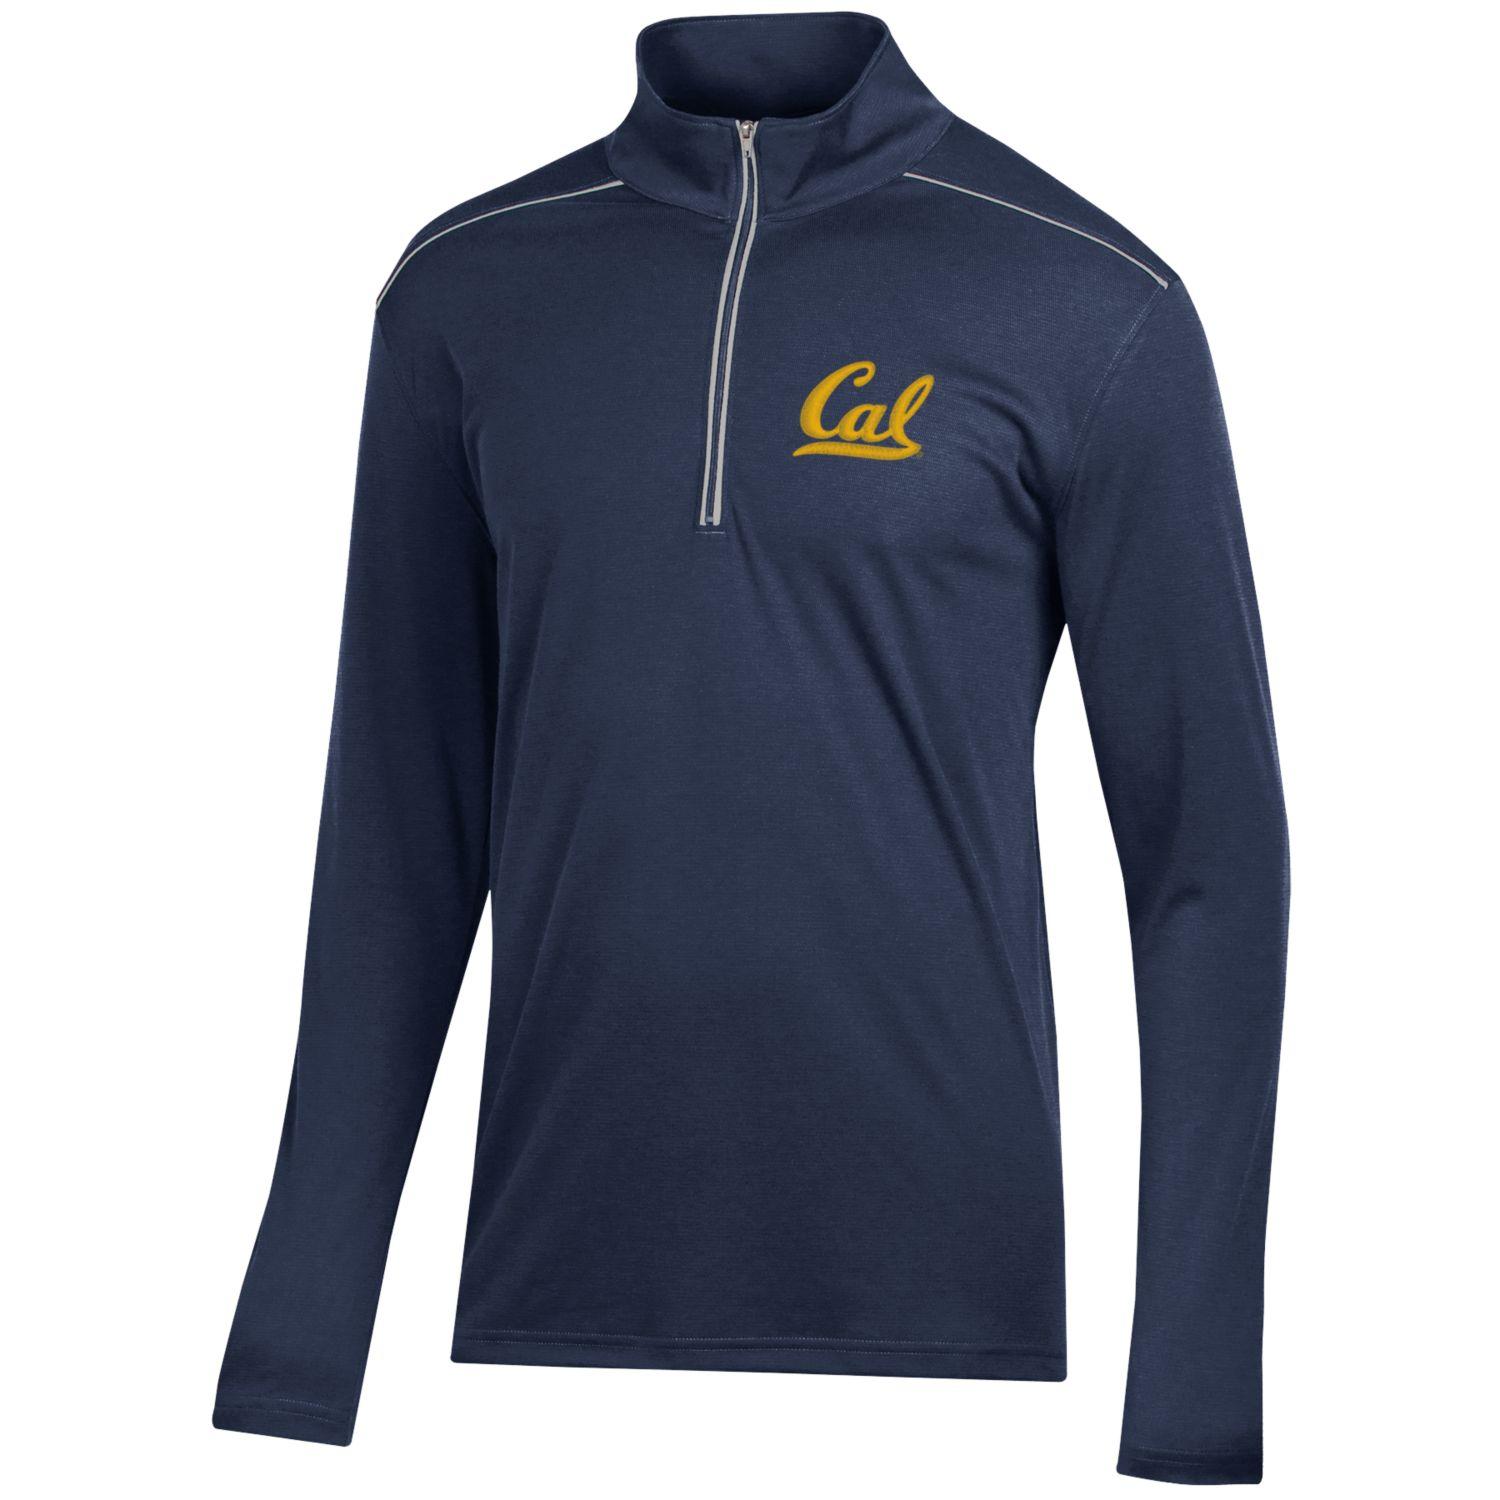 U.C. Berkeley Cal embroidered jacquard 1/4 Zip shirt-Navy-Shop College Wear